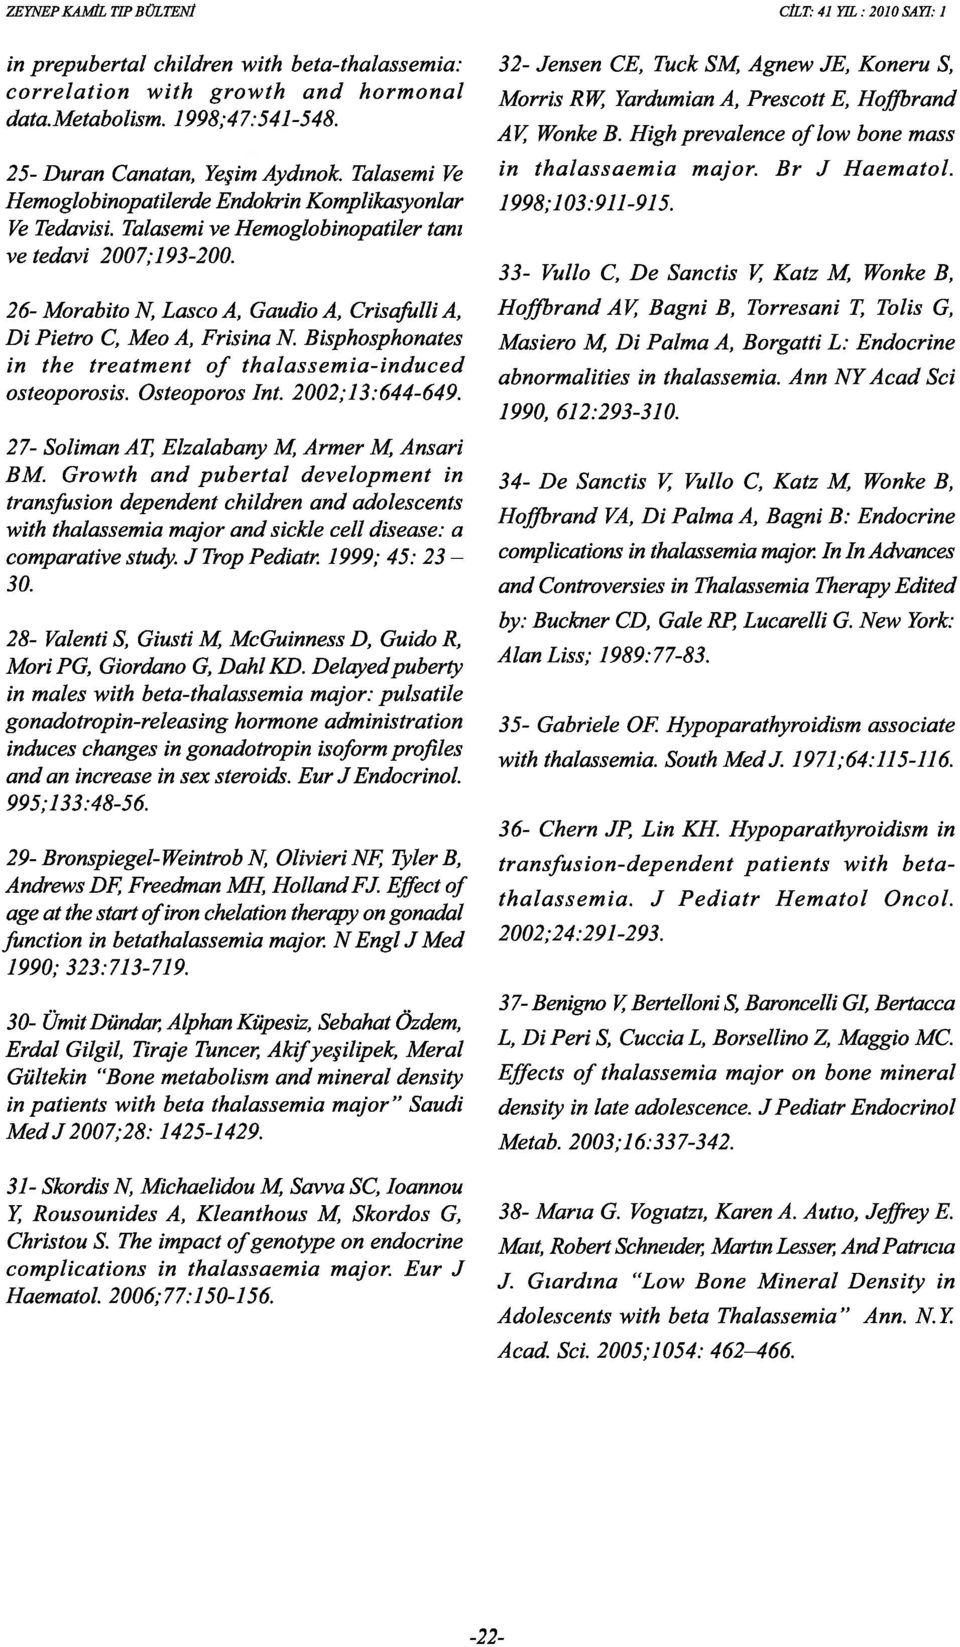 26- Morabito N, Lasco A, Gaudio A, Crisafulli A, Di Pietro C, Meo A, Frisina N. Bisphosphonates in the treatment of thalassemia-induced osteoporosis. Osteoporos Int. 2002;13:644-649.